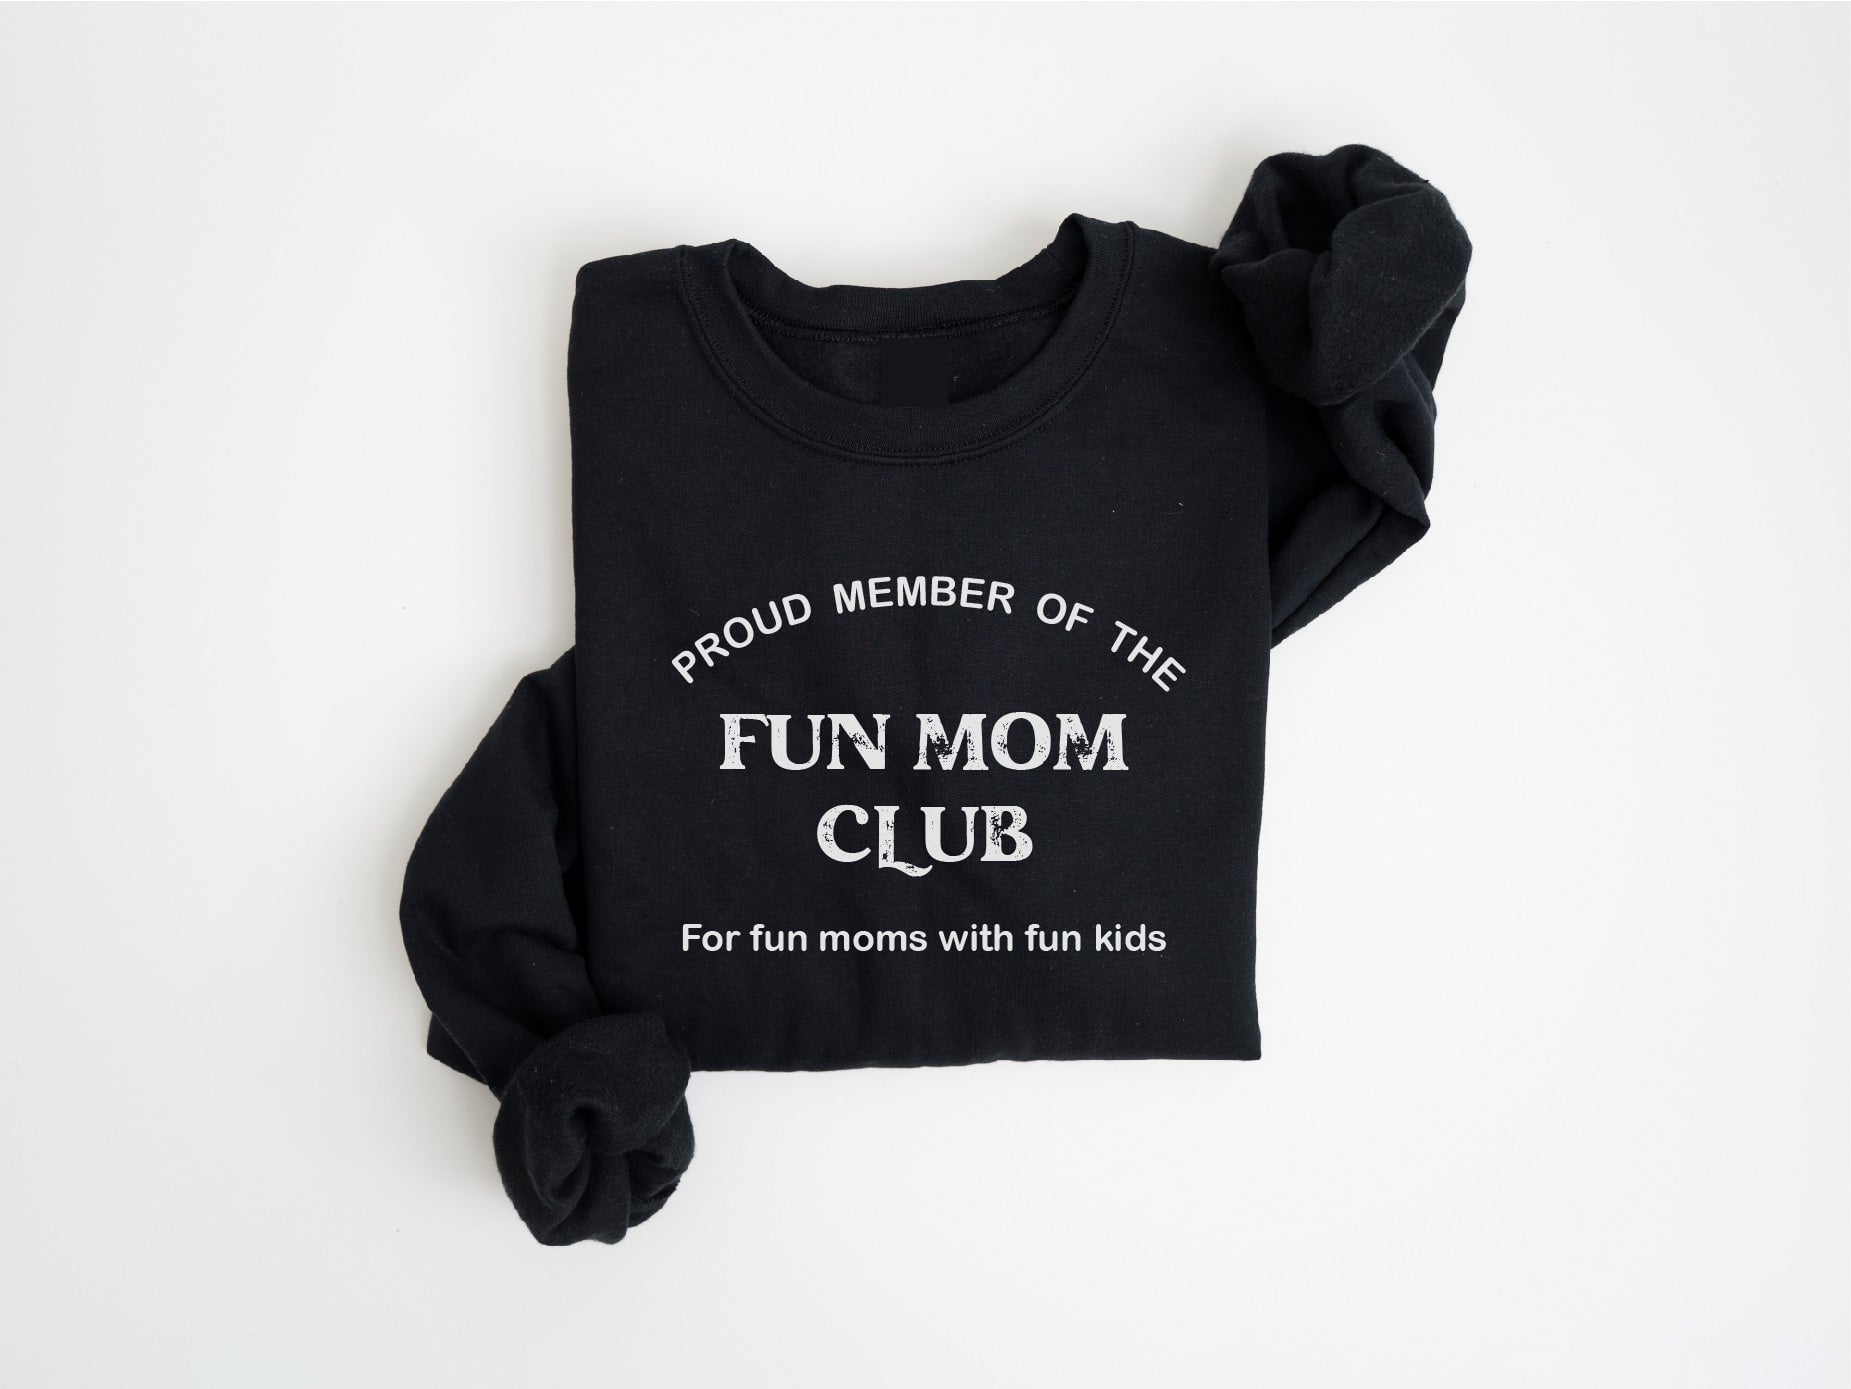 Fun mom club fleece sweatshirt mom Lane seven unisex sweatshirt 